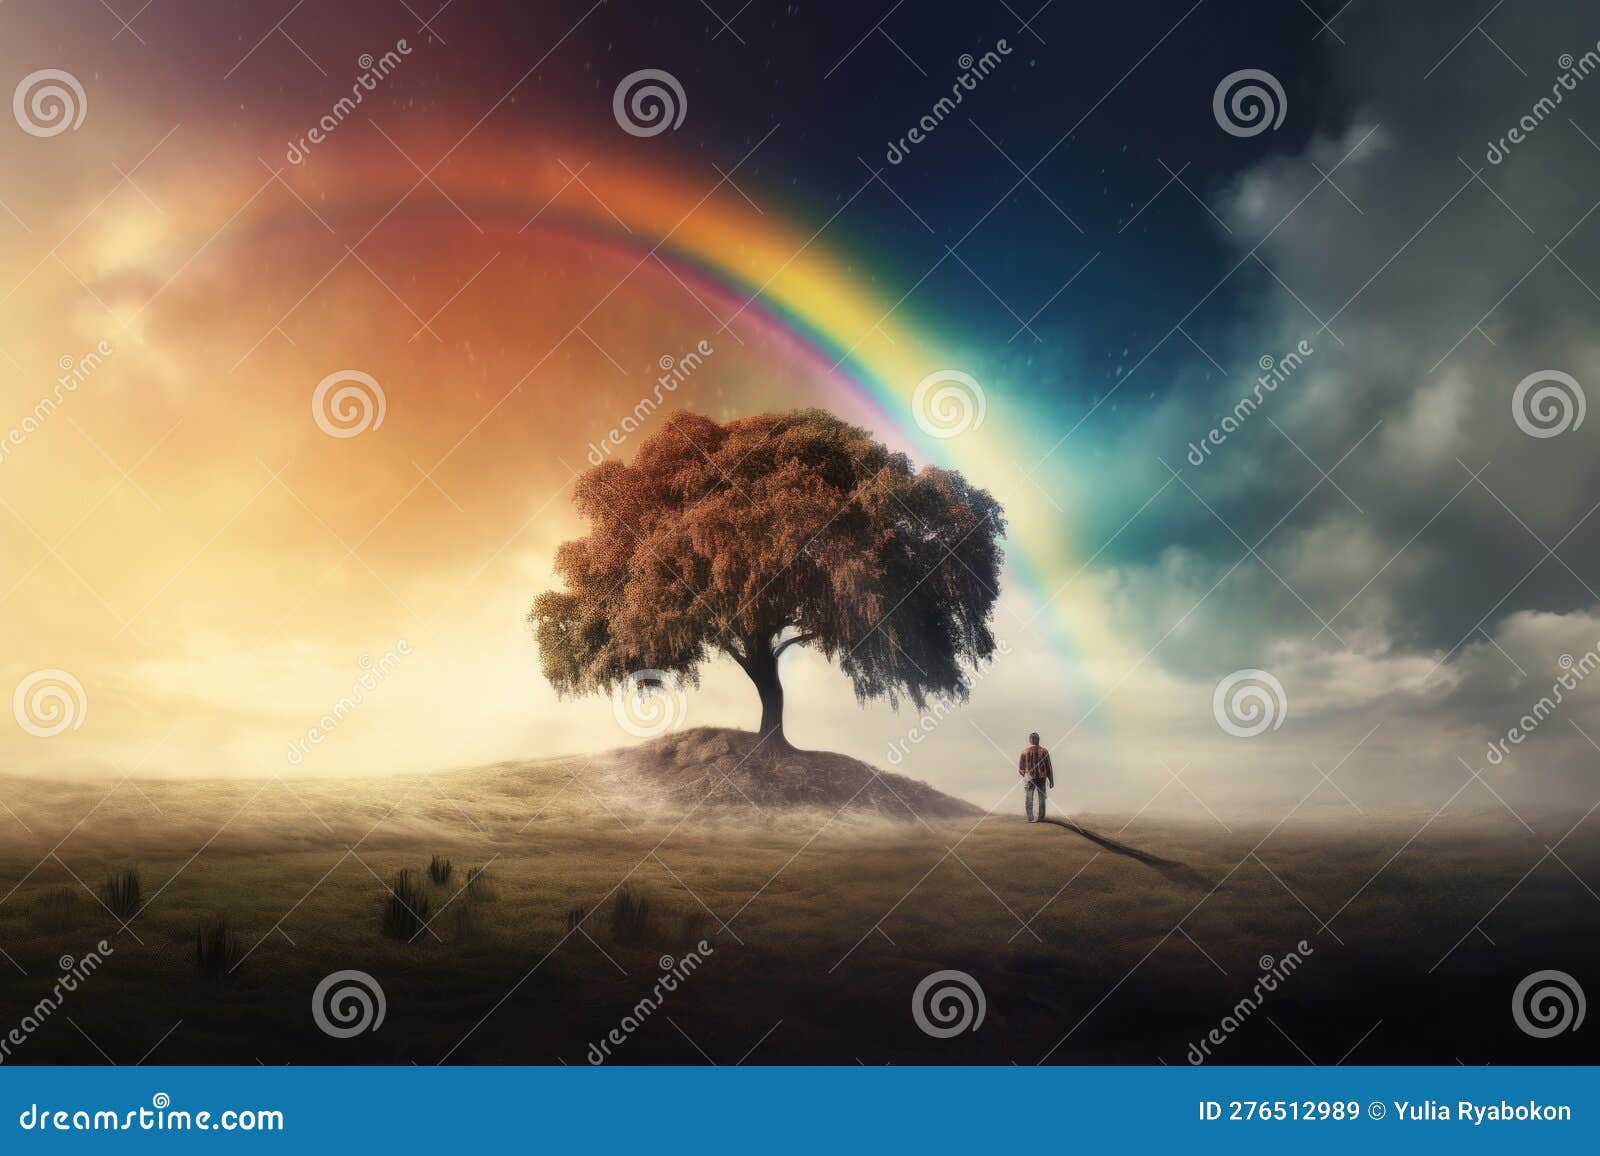 rainbow naturen near tree. generate ai